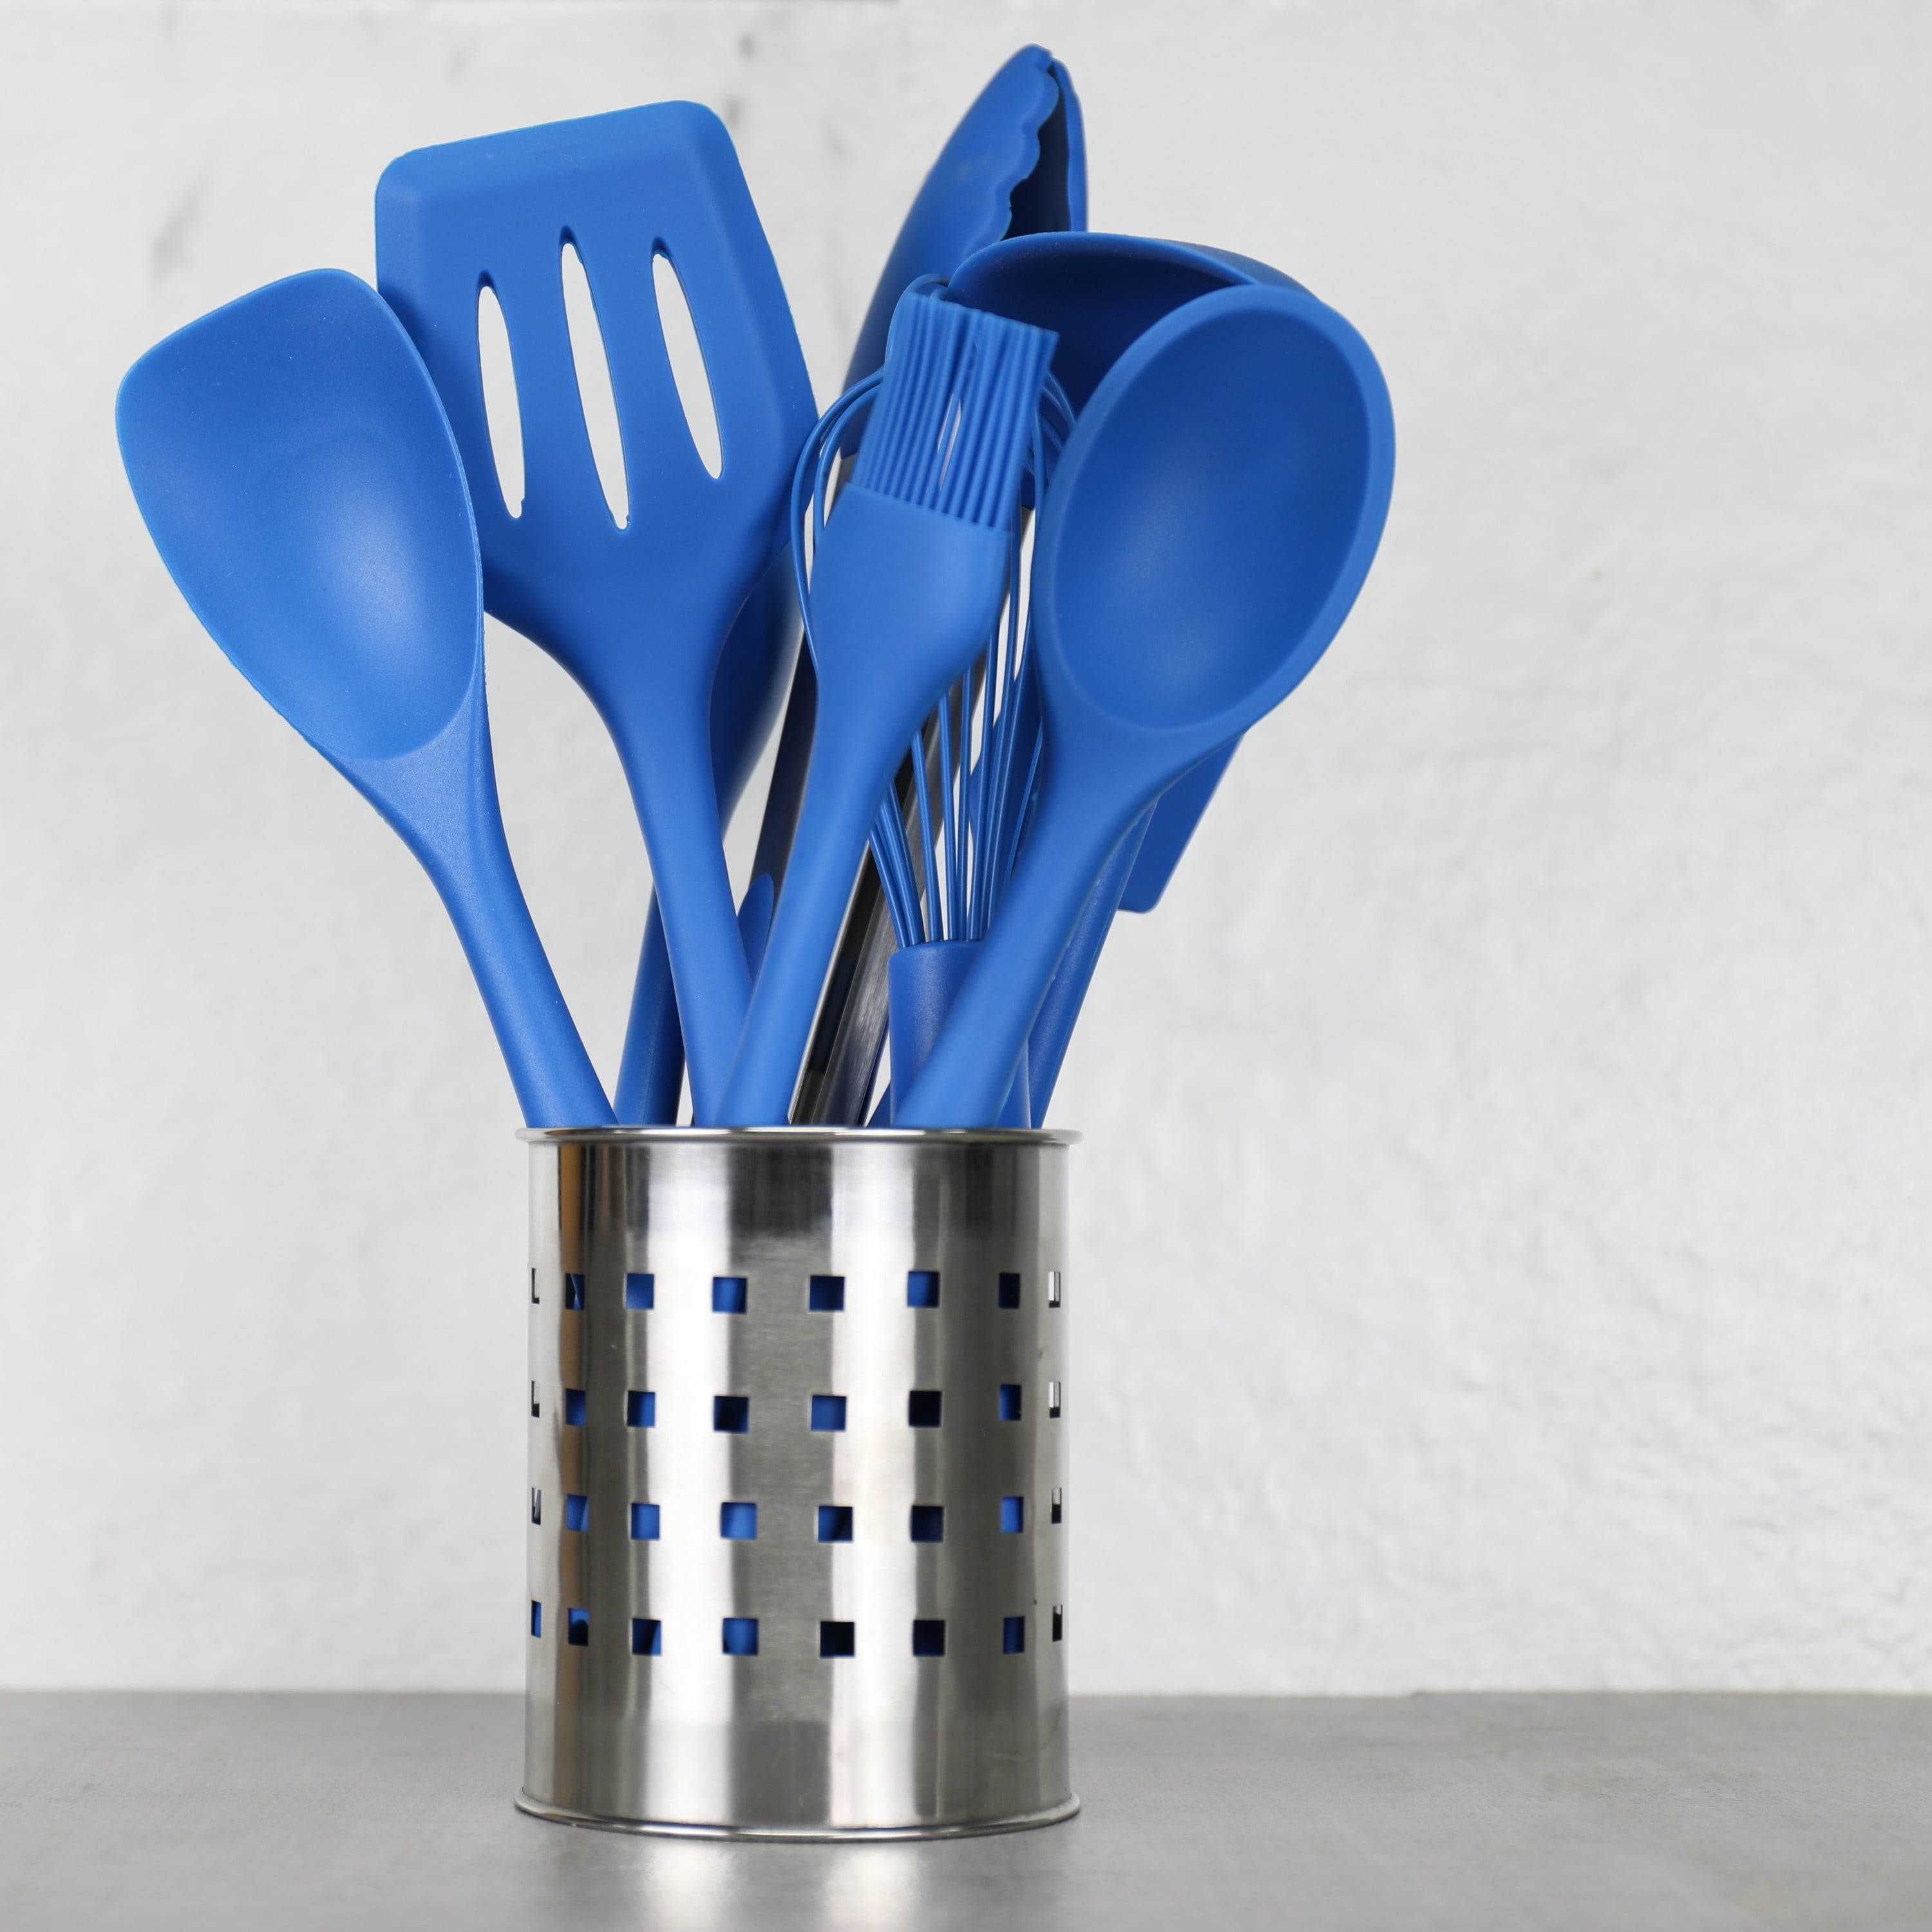 Silicone spoon set, short - Sebra Eat - Vintage blue – sebra